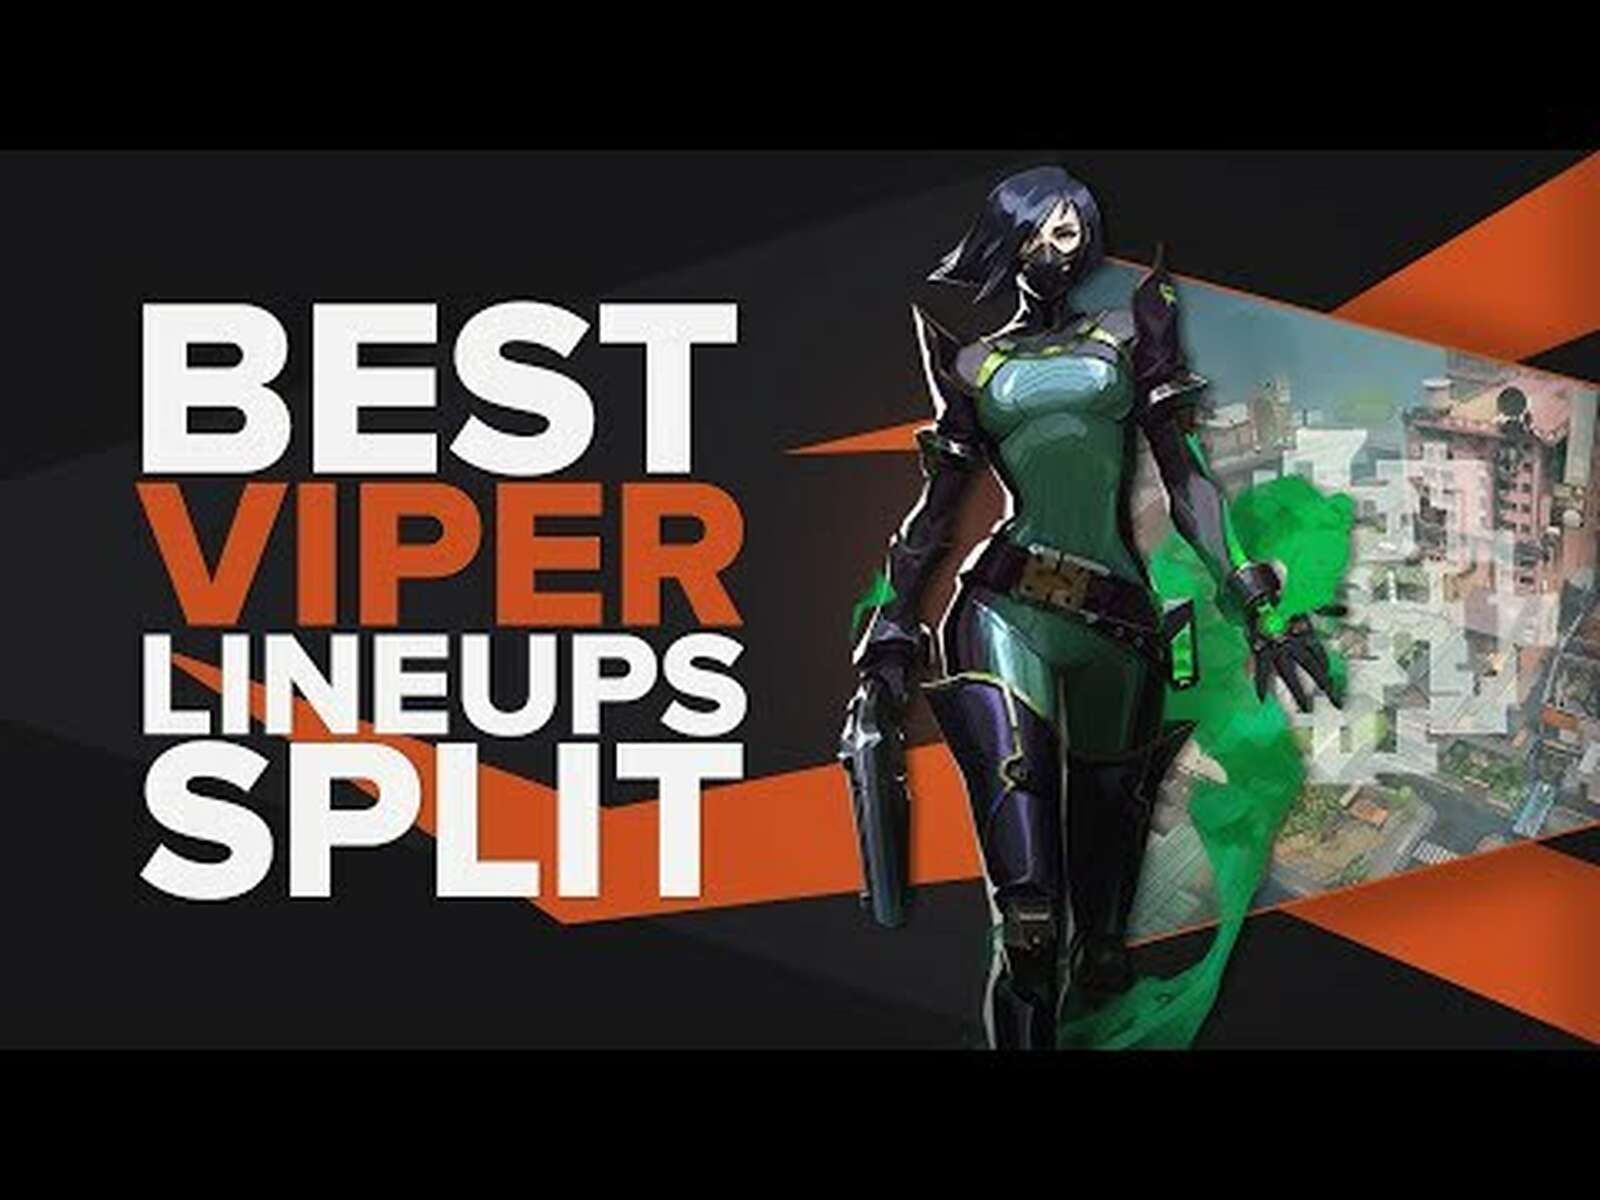 The Best Viper Lineups on Split